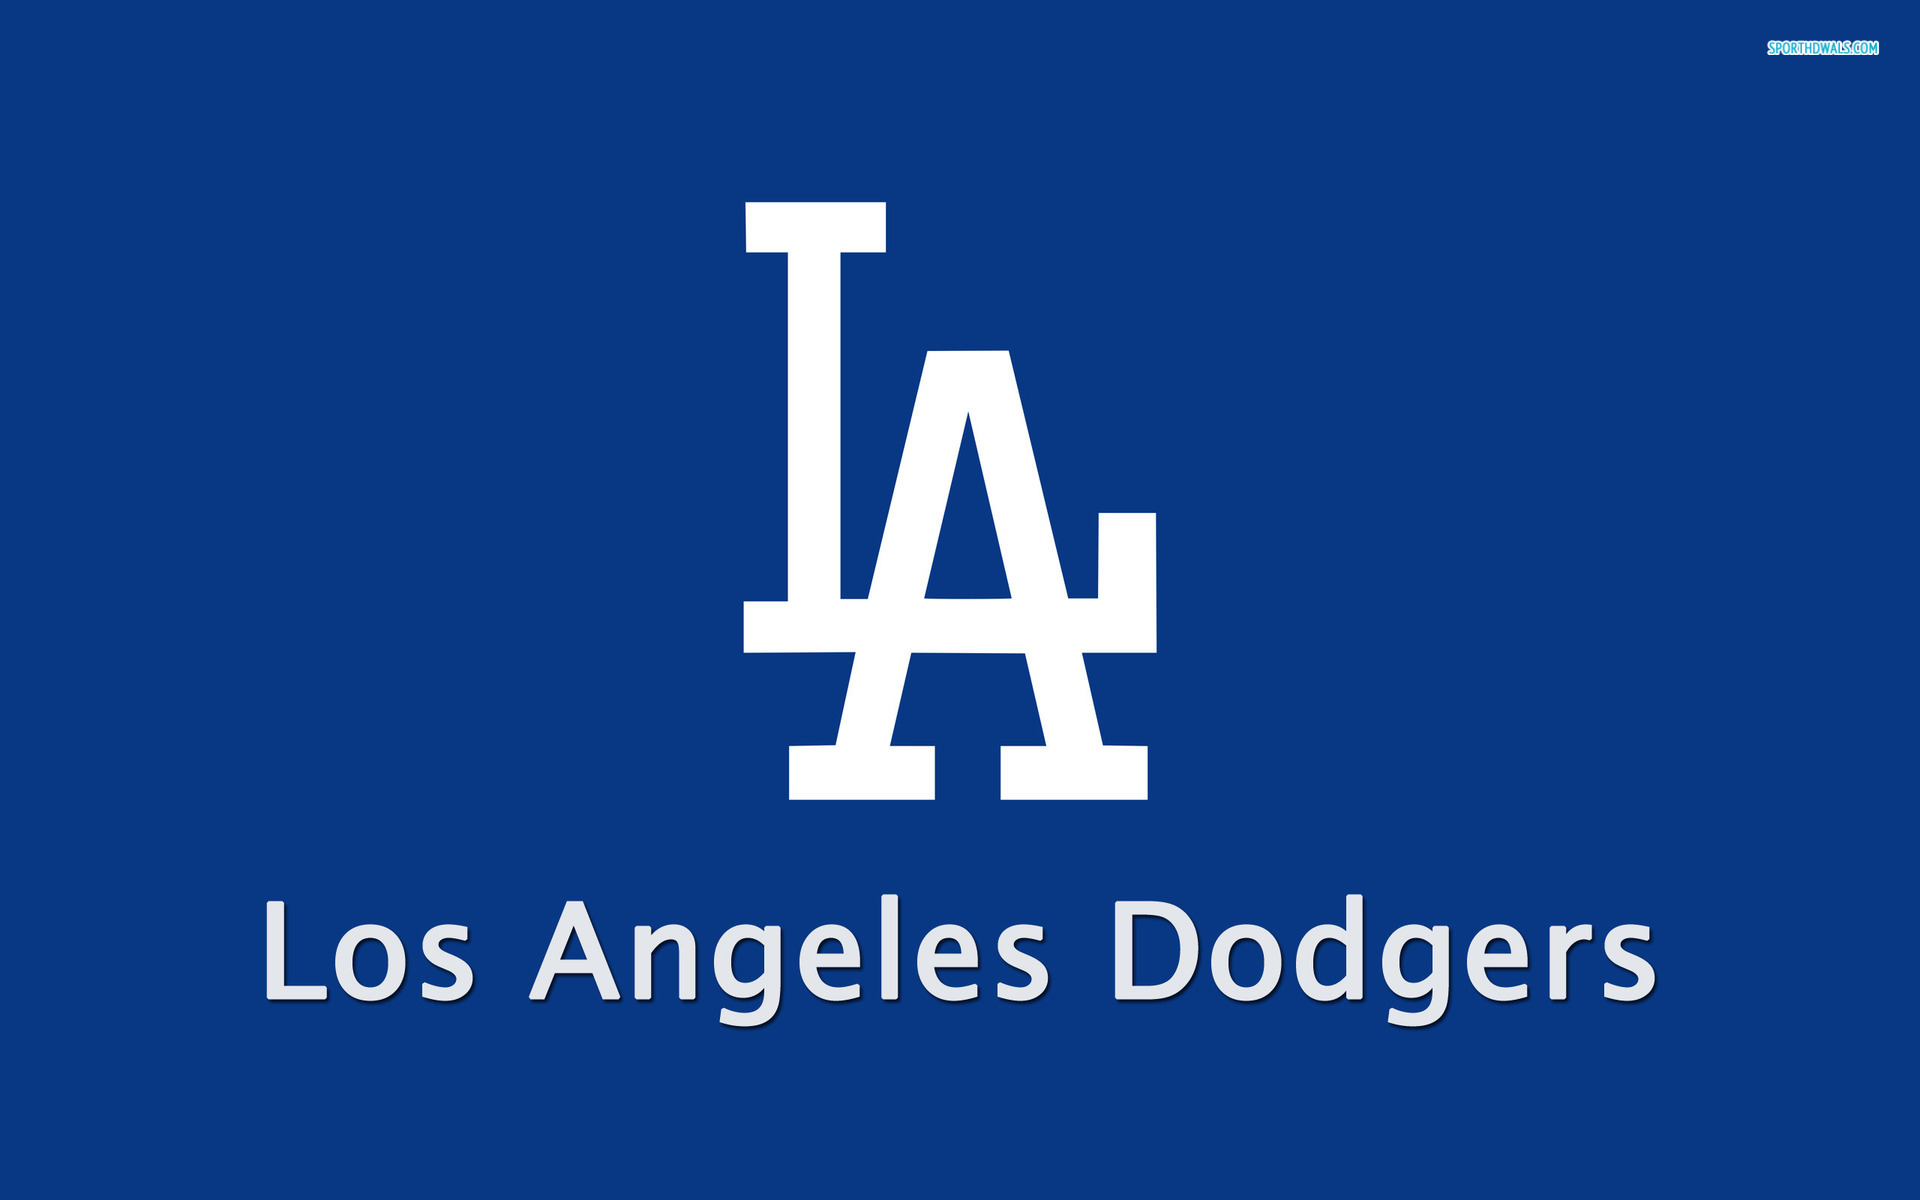  Los Angeles Dodgers desktop wallpaper Los Angeles Dodgers wallpapers